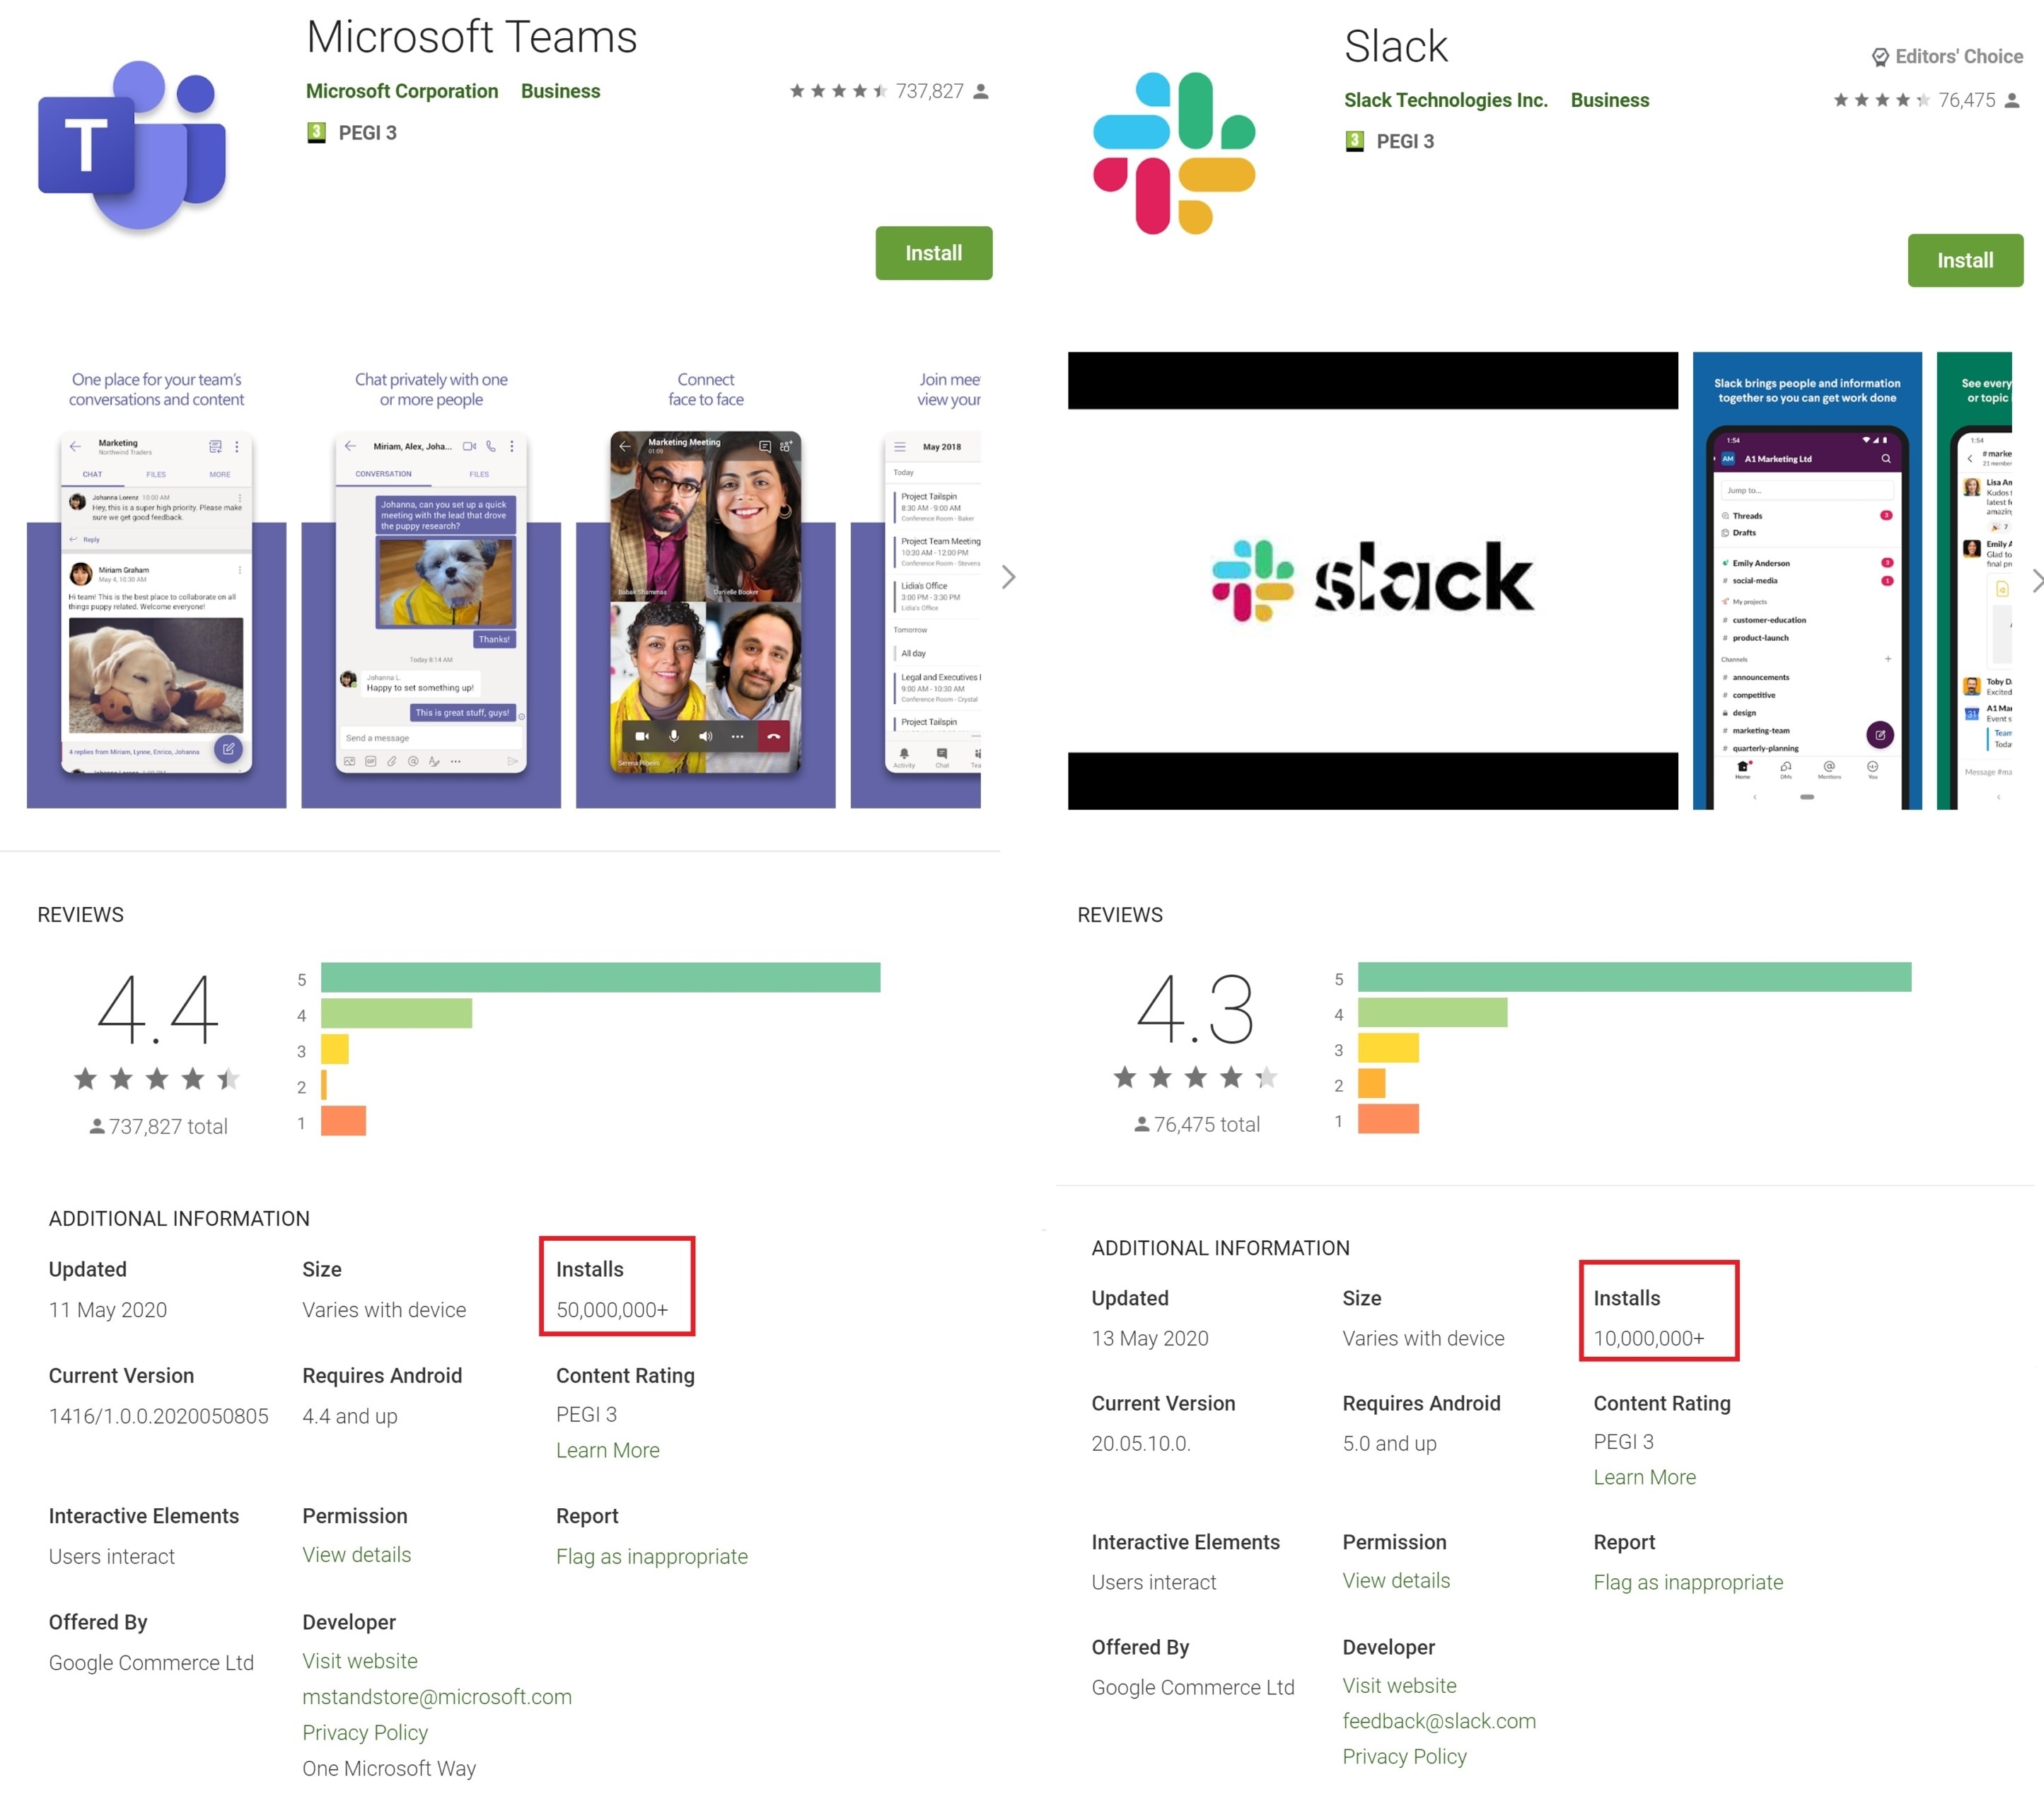 Microsoft Teams, Google Play Store’da Slack’i geçmeyi başardı